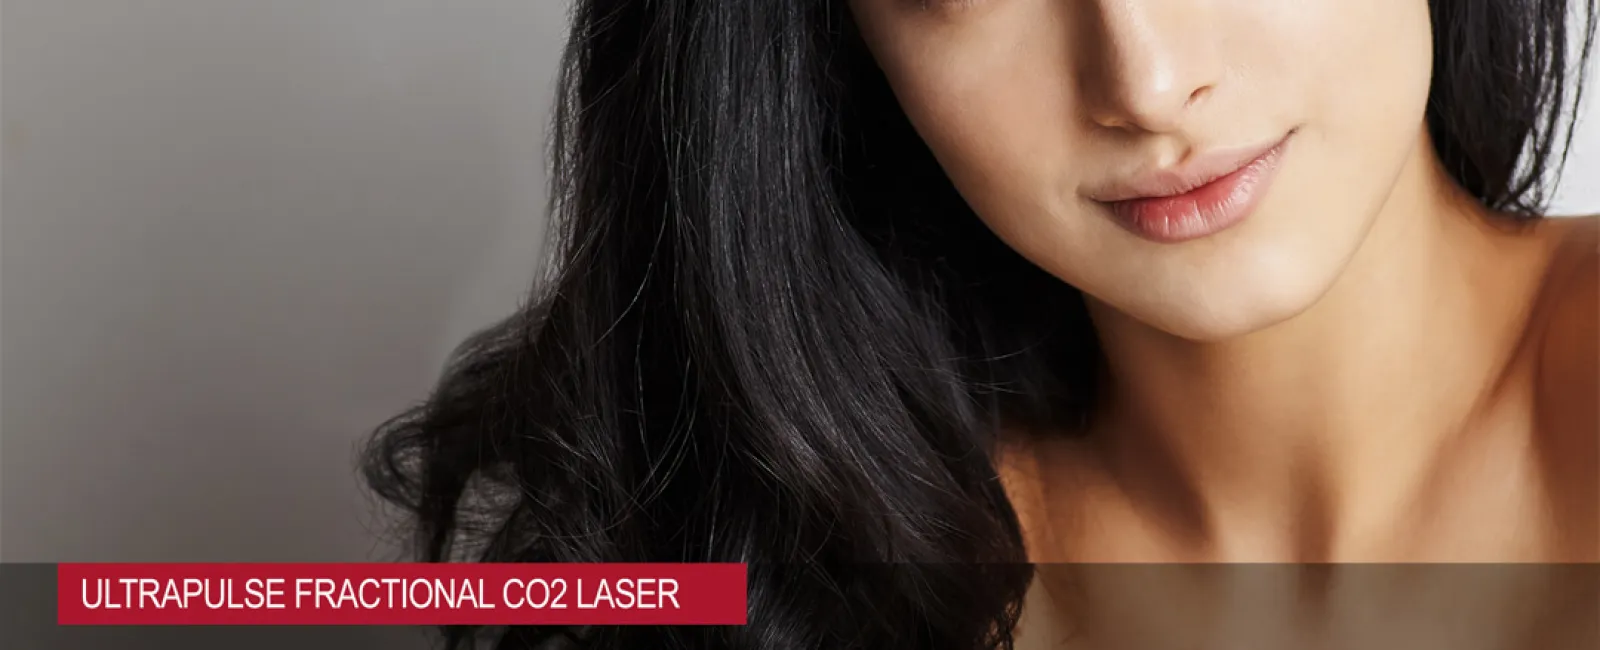 Laser Skin Resurfacing Treatments